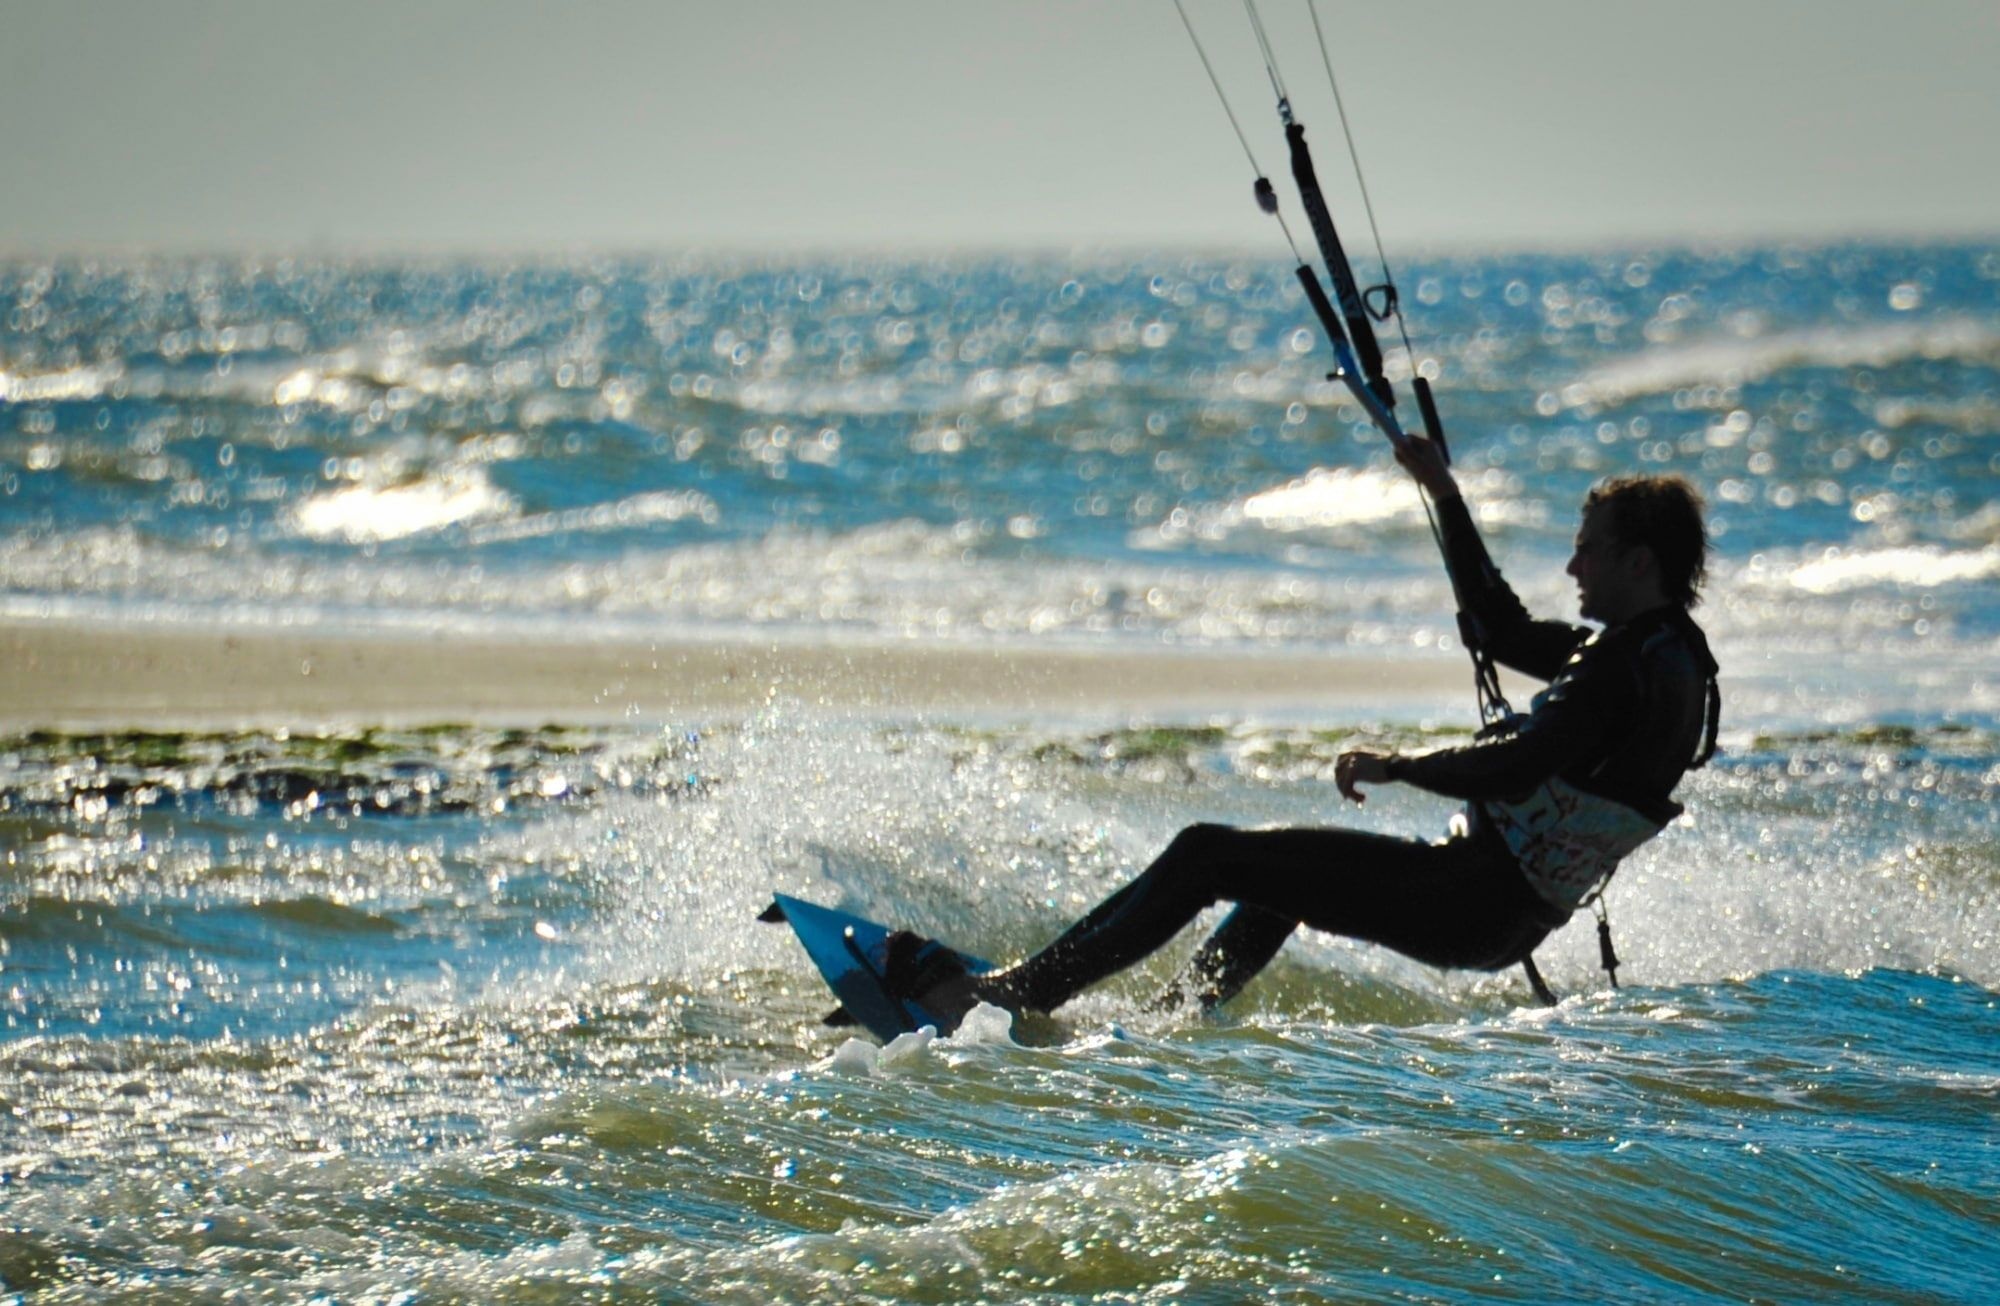 Kiteboarding: Kiting and sailing skill, Kite steering in waves, Black wakeboard. 2000x1310 HD Wallpaper.